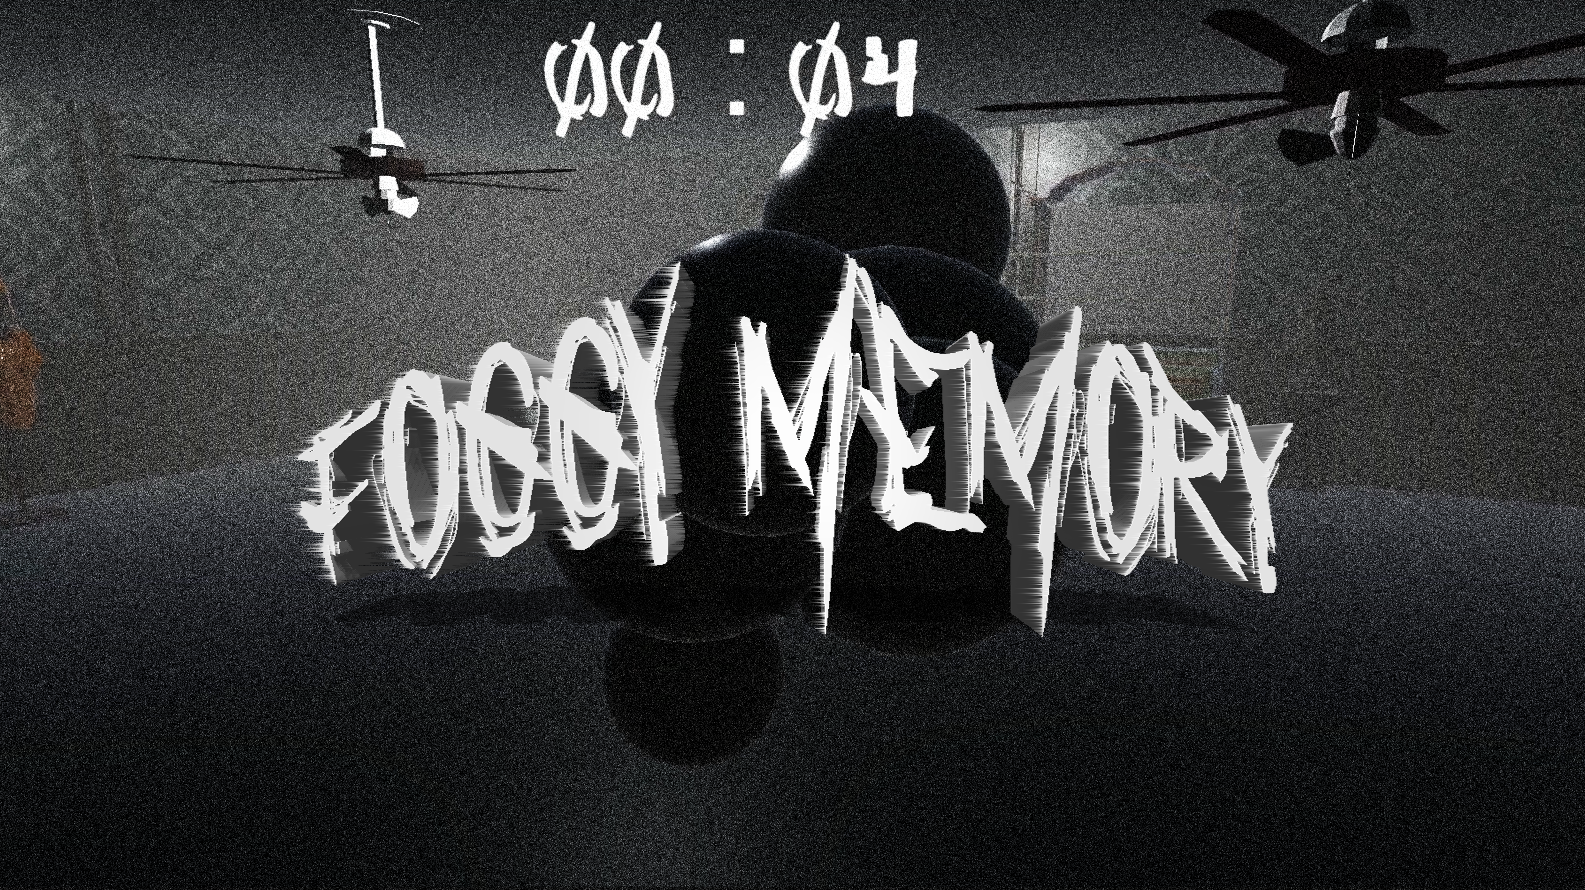 Foggy Memory